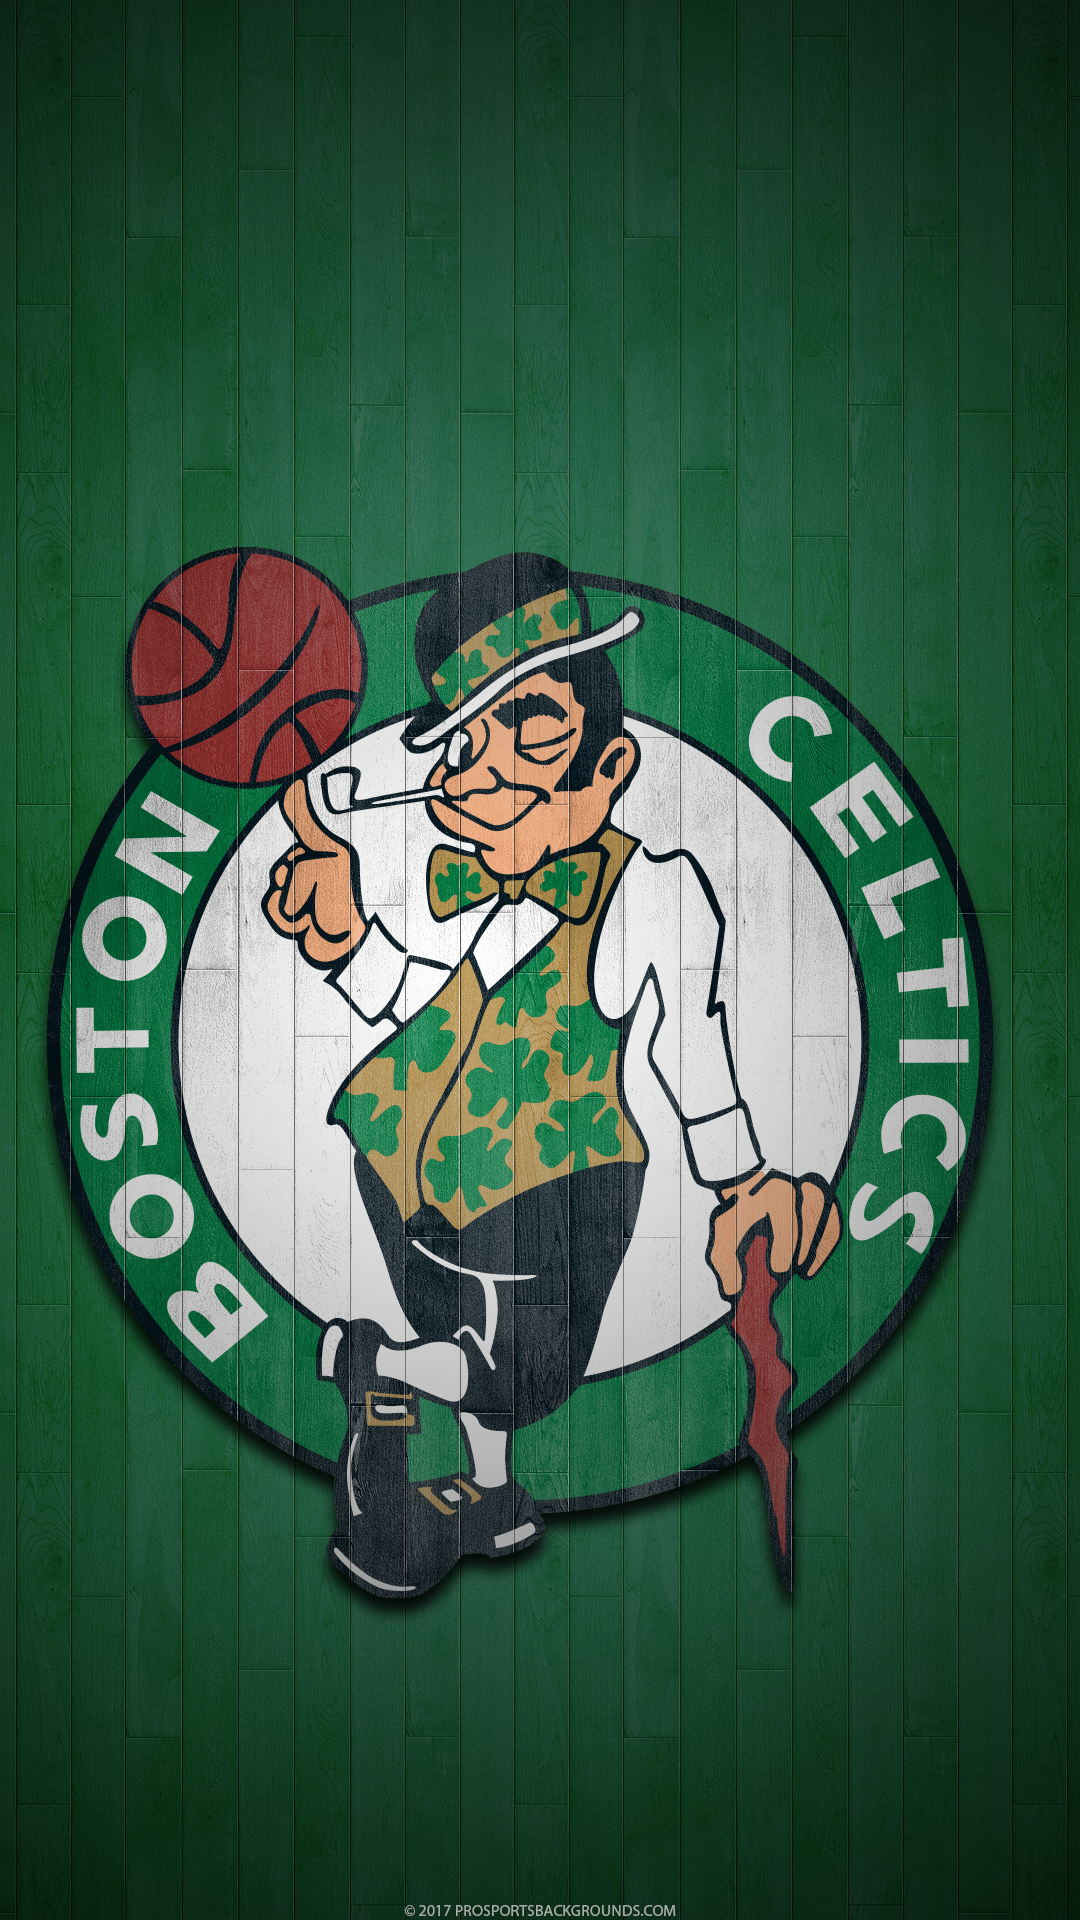 Celtics iPhone Wallpaper Free Celtics iPhone Background